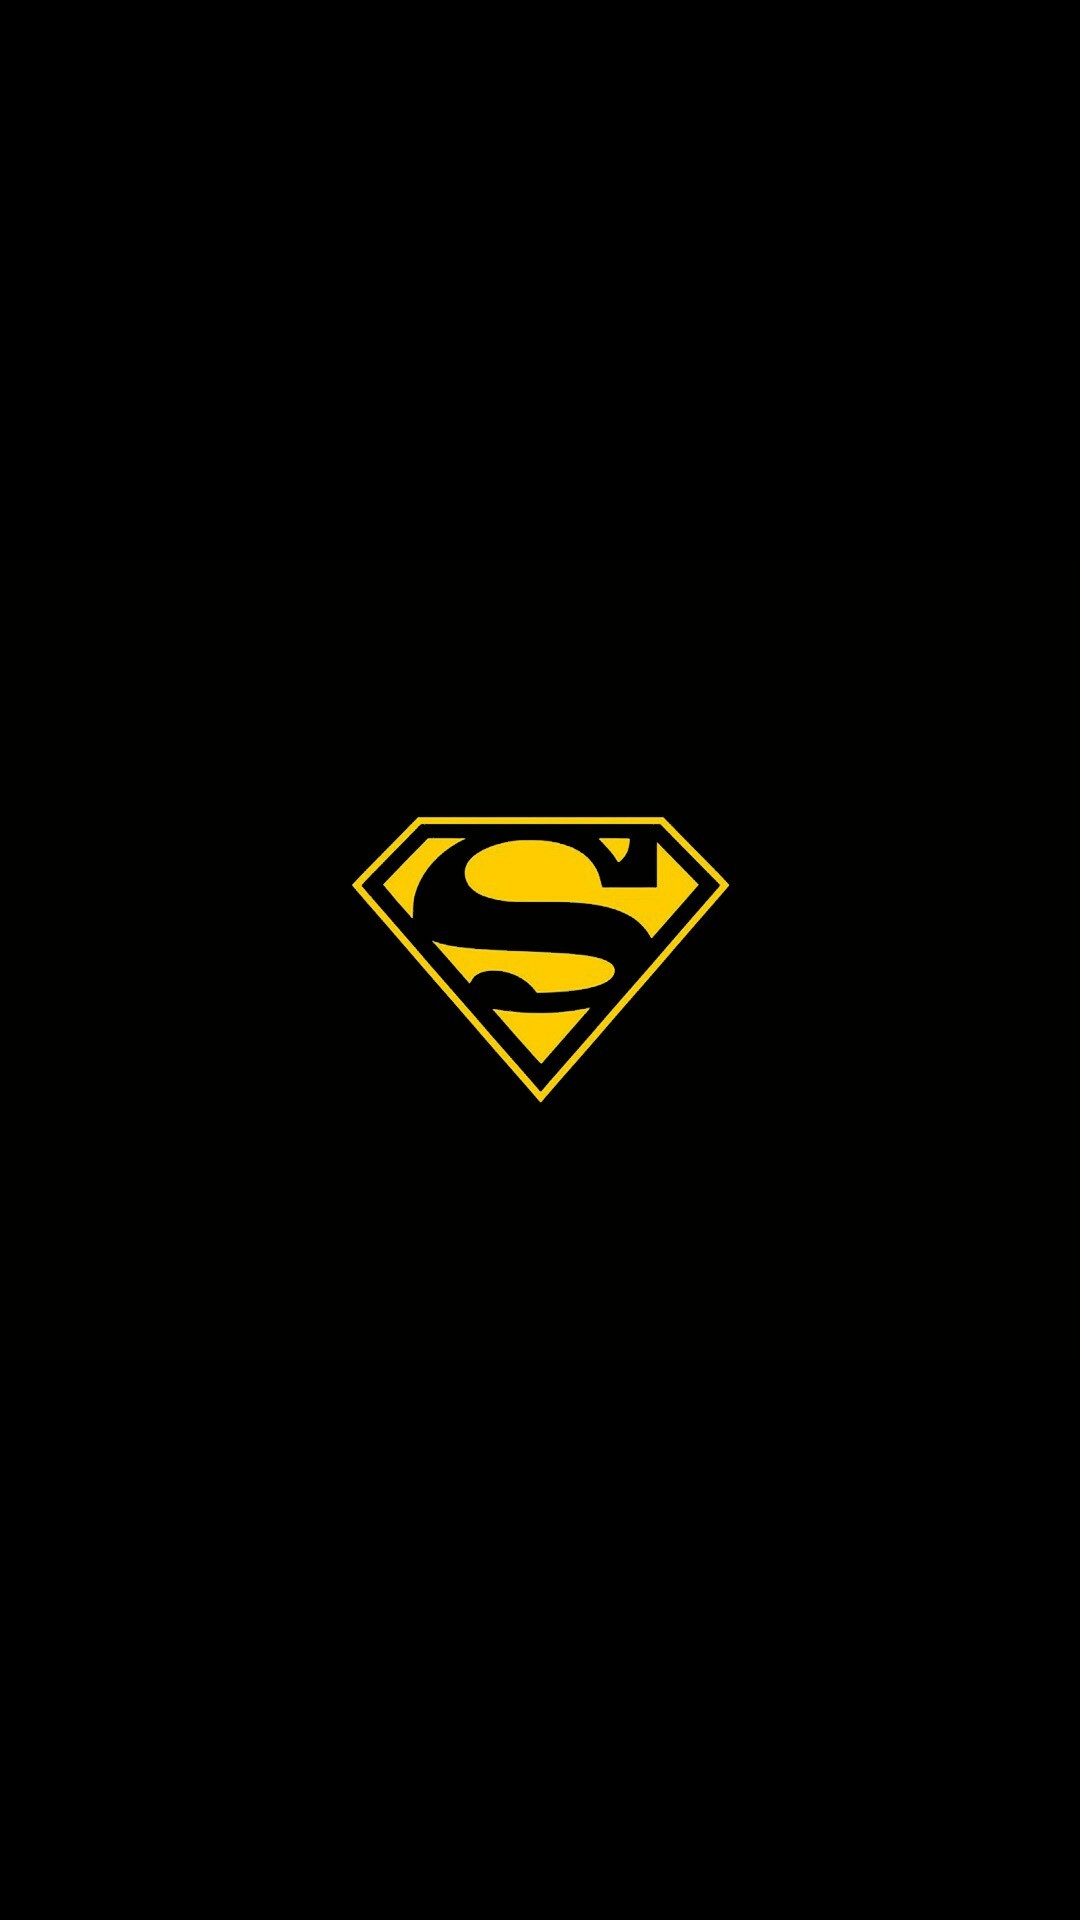 Superman Yellow T-Shirt Logo iPhone 6 Plus HD Wallpaper